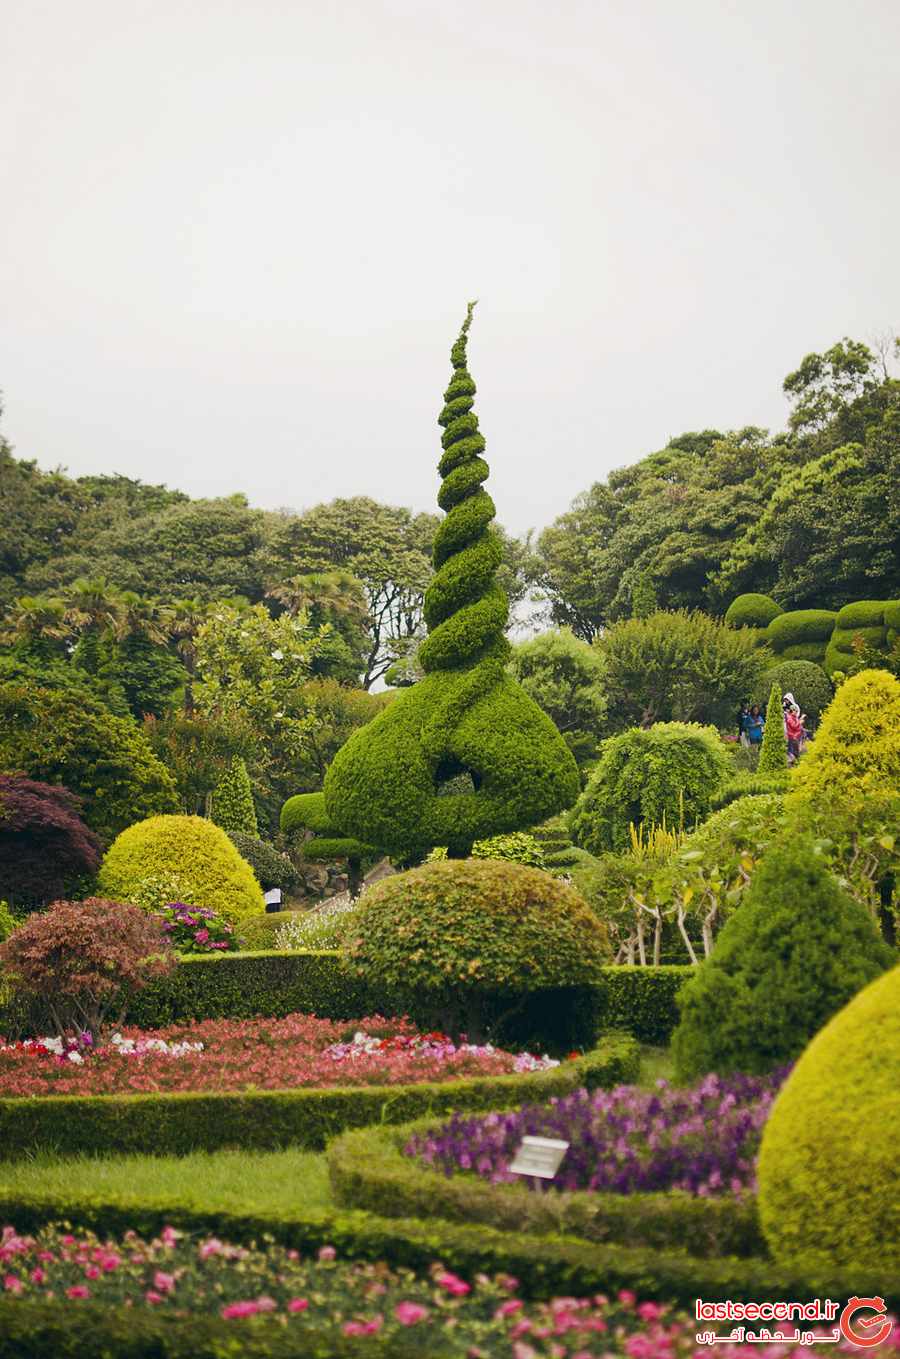 اوئدو ، باغ  گیاهشناسی رویایی در کره جنوبی